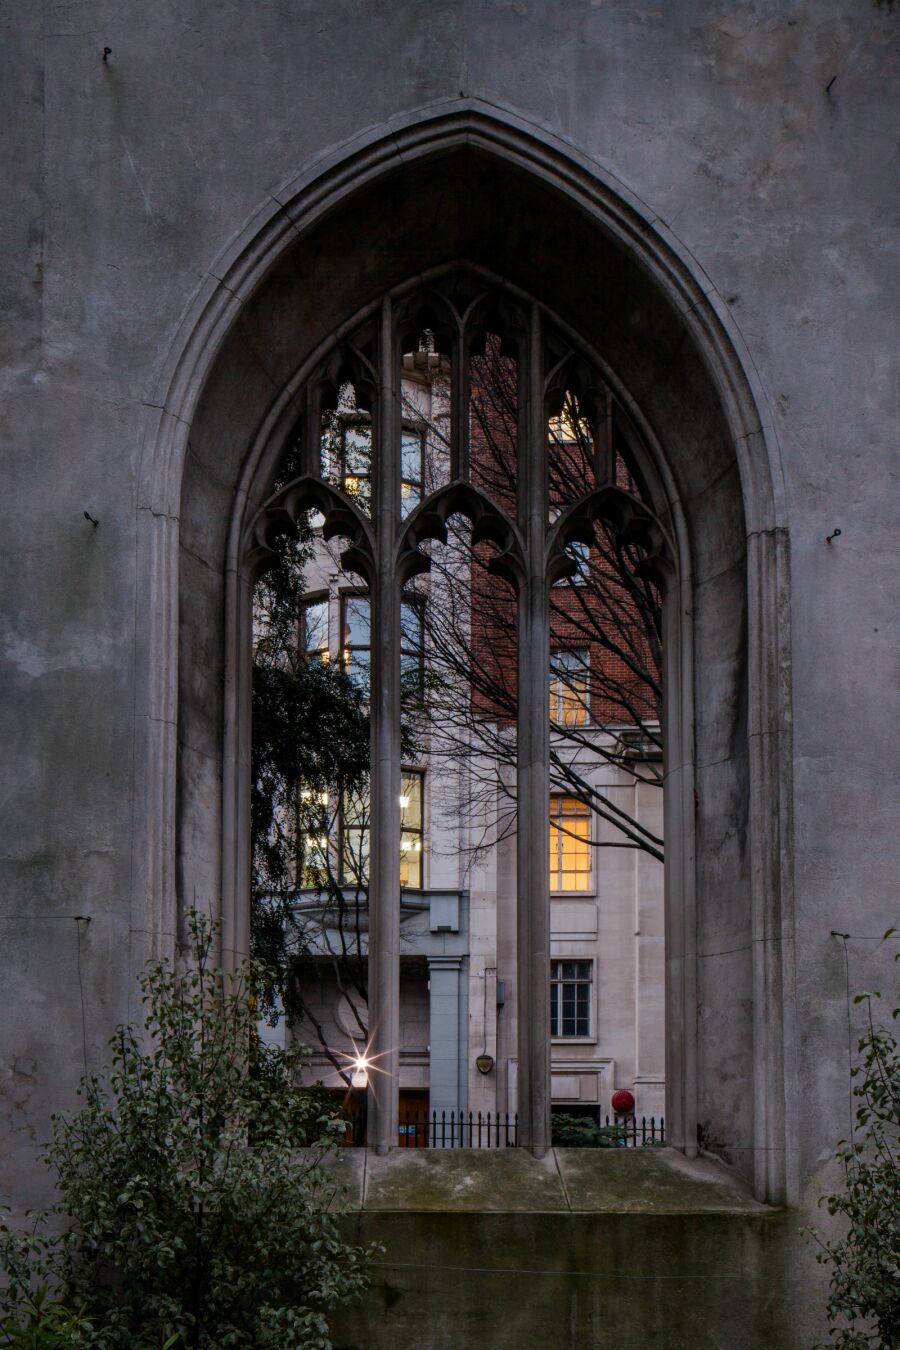 Gothic window at St Dunstan's church.